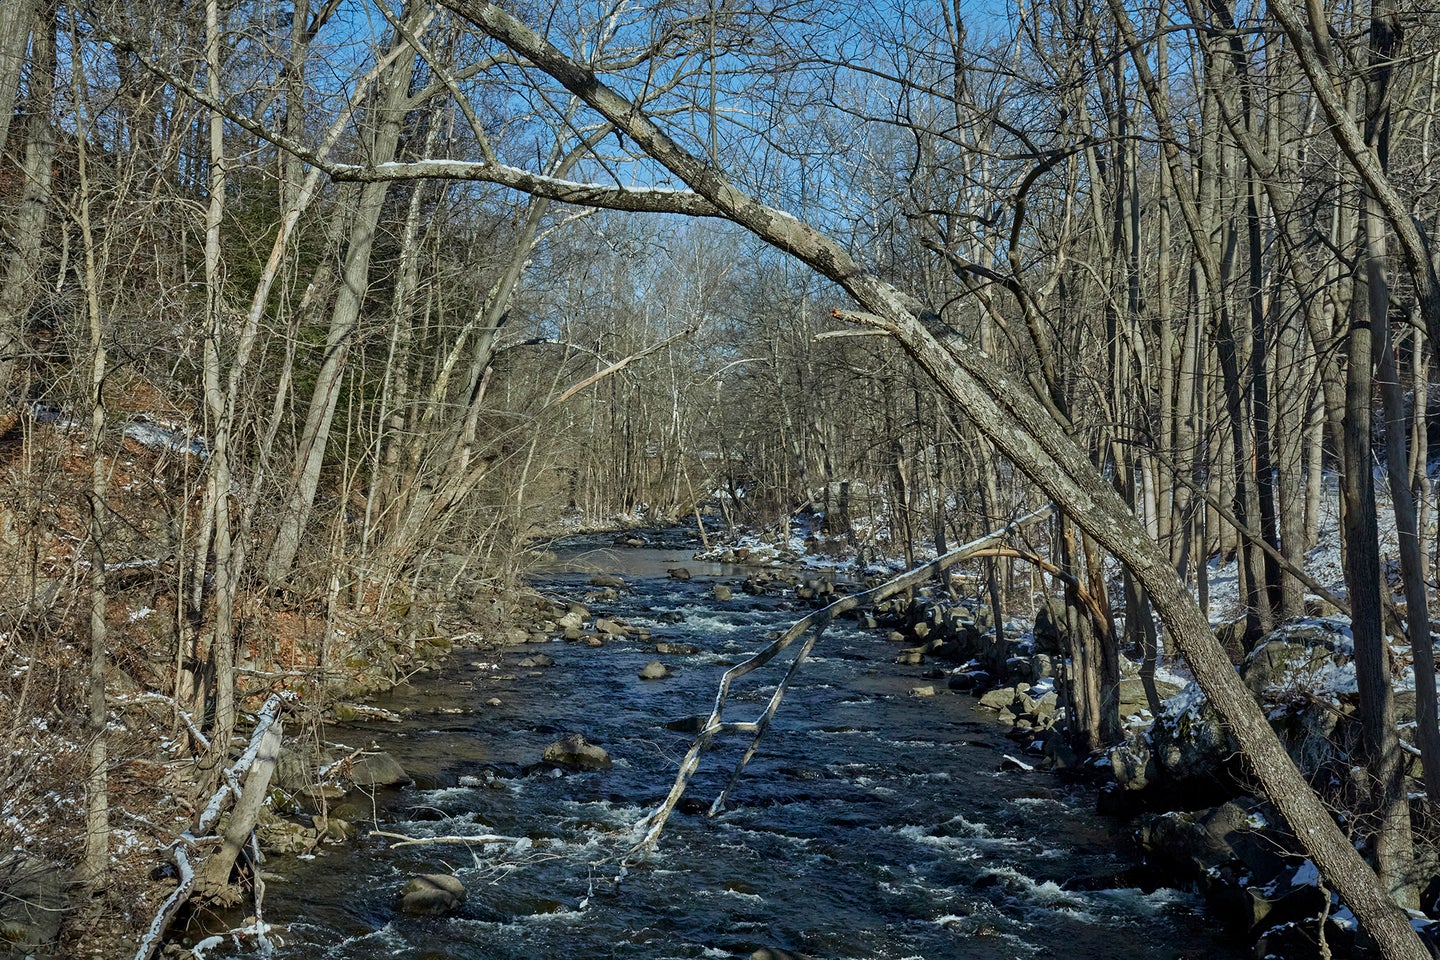 Croton River, New York, bare trees